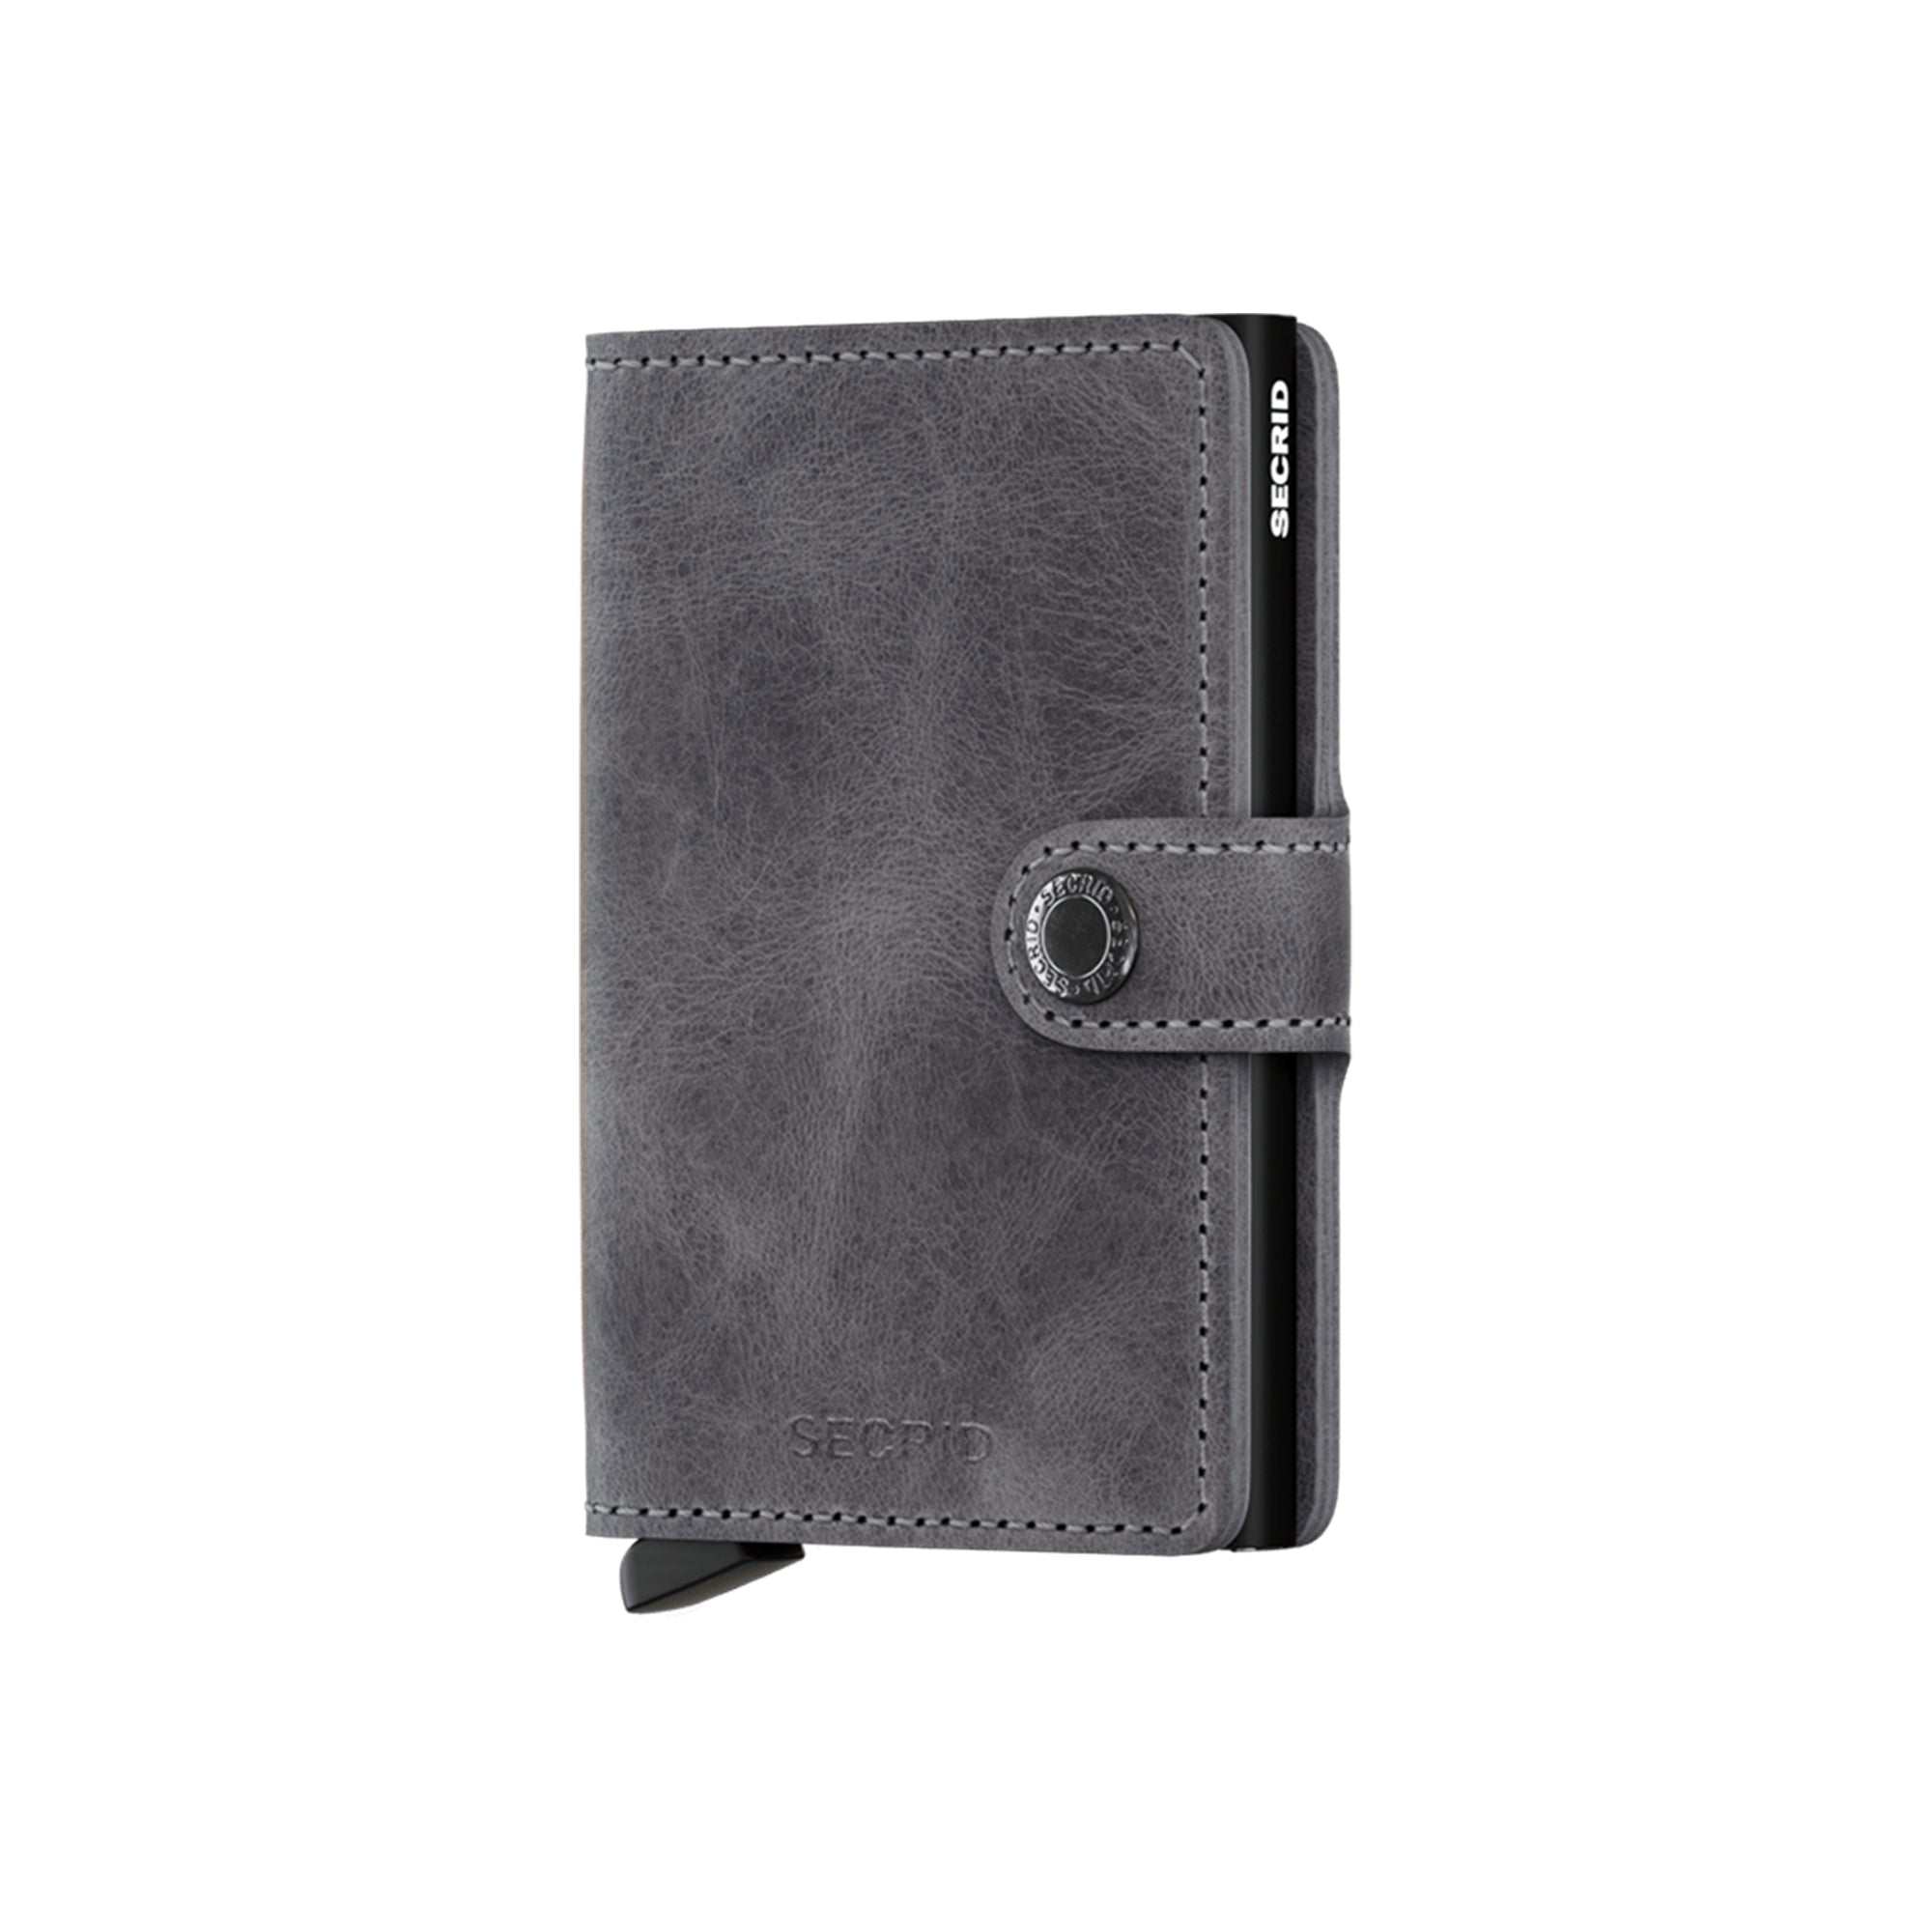 Secrid Mini Wallet Vintage Grey / Black